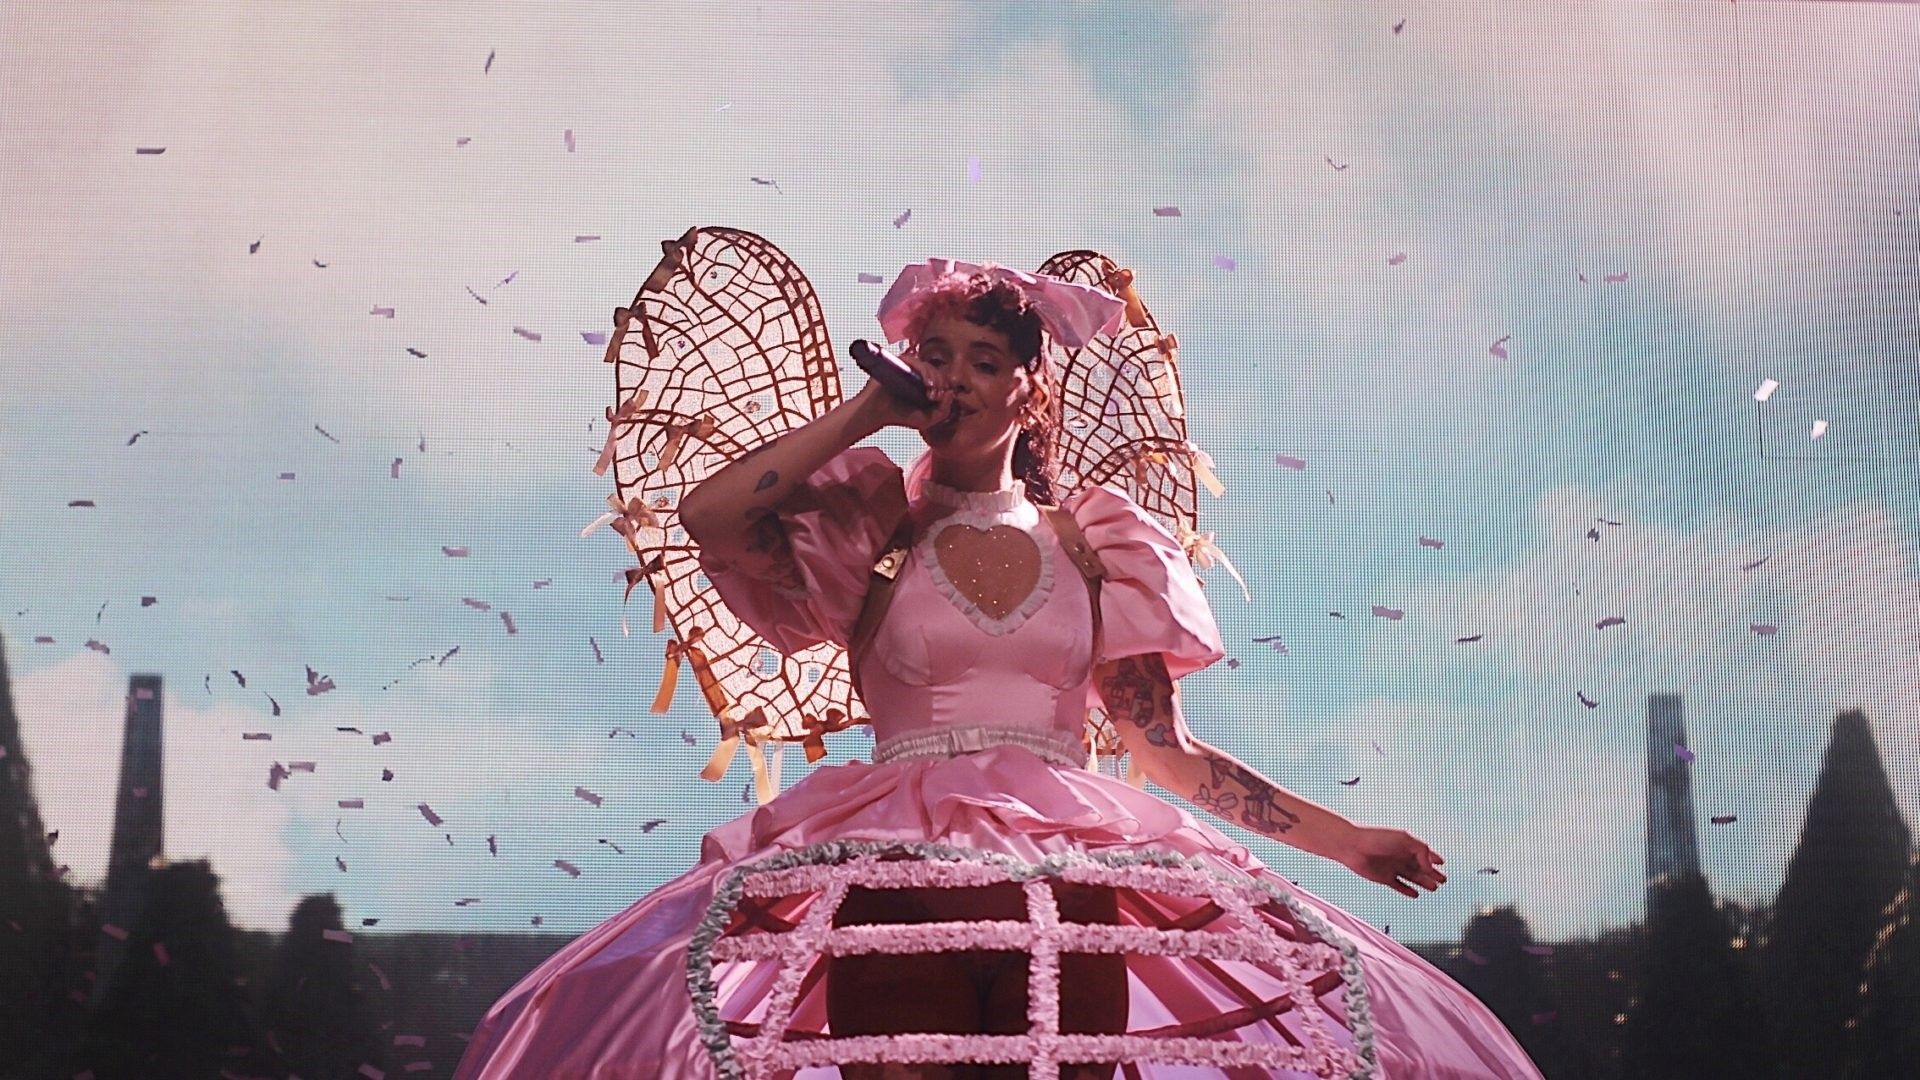 Lorde in a pink dress singing on stage - Melanie Martinez